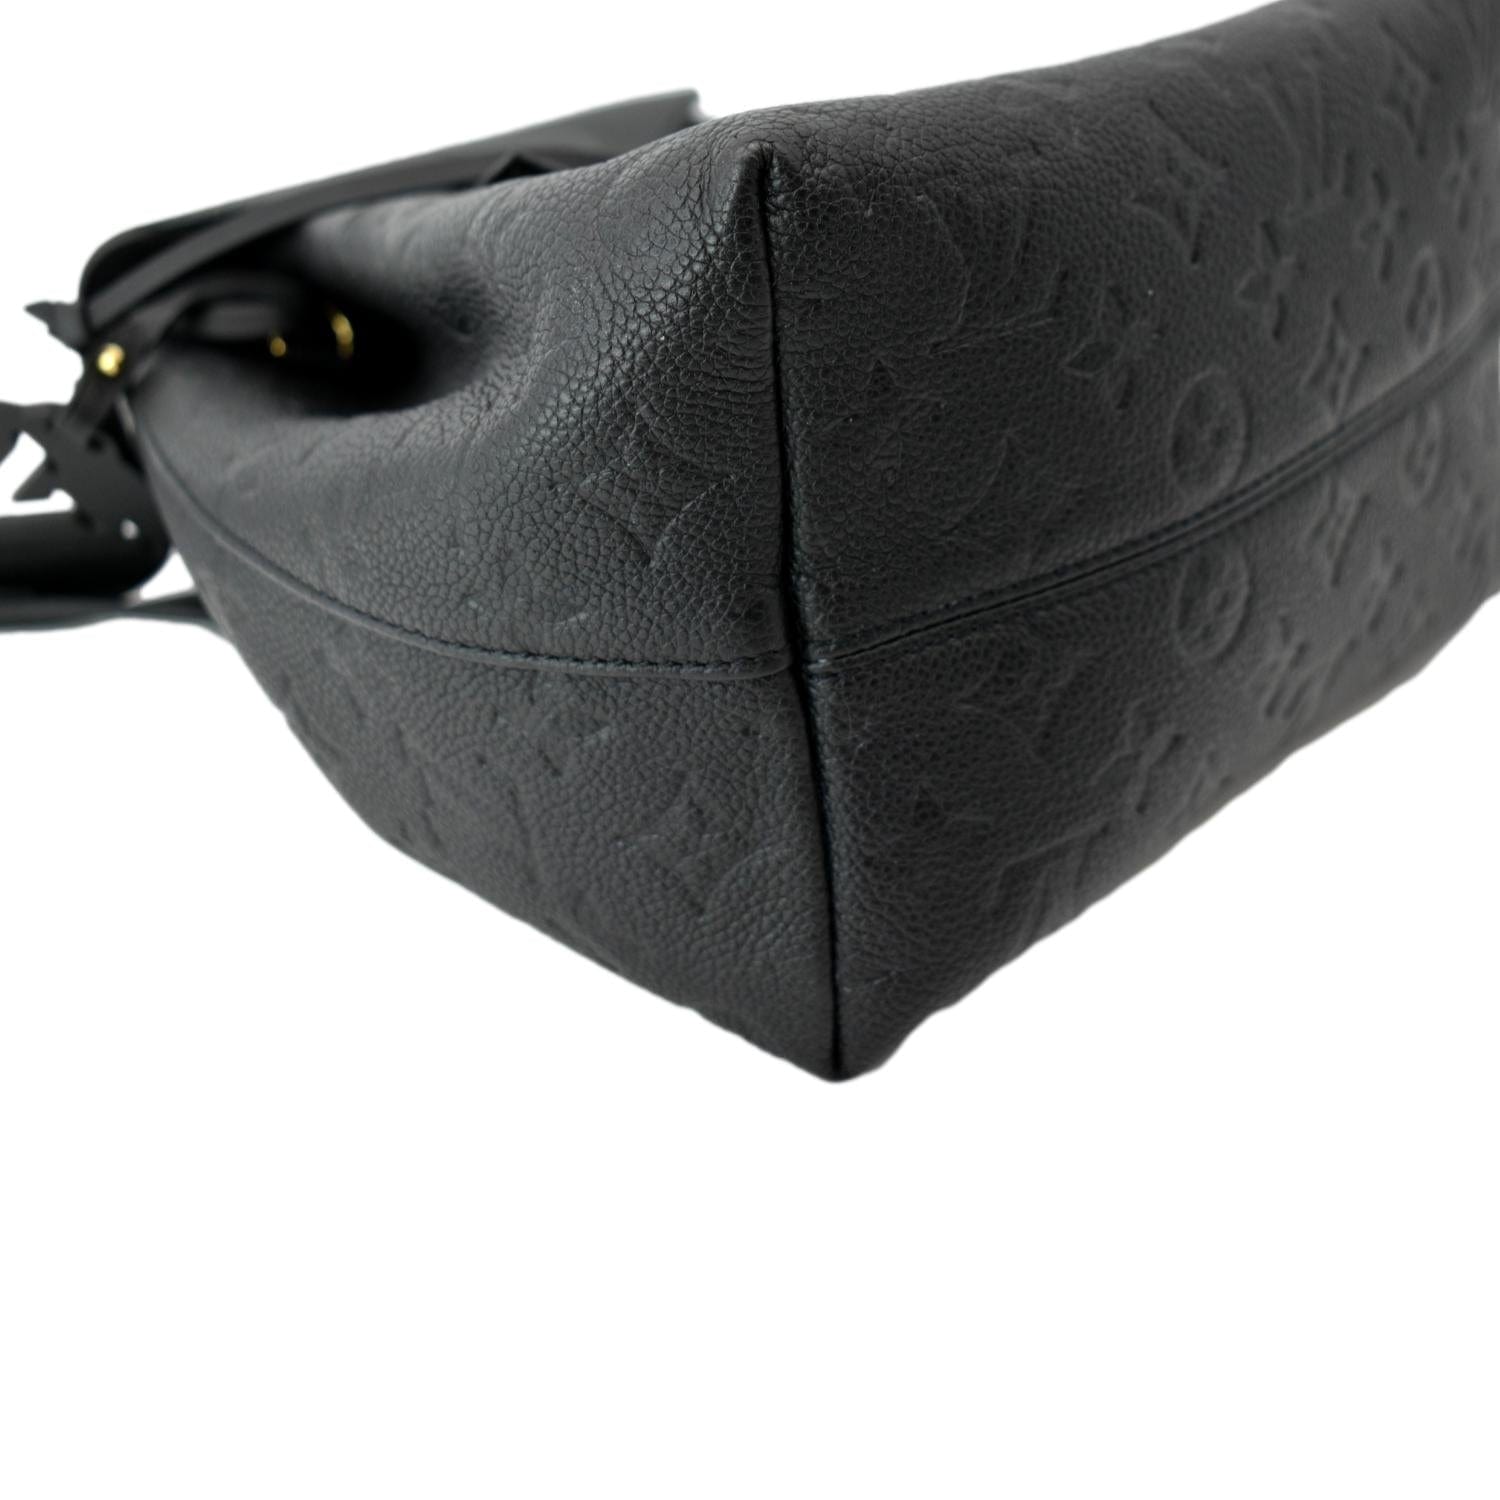 Montsouris Backpack - Luxury Monogram Empreinte Leather Grey